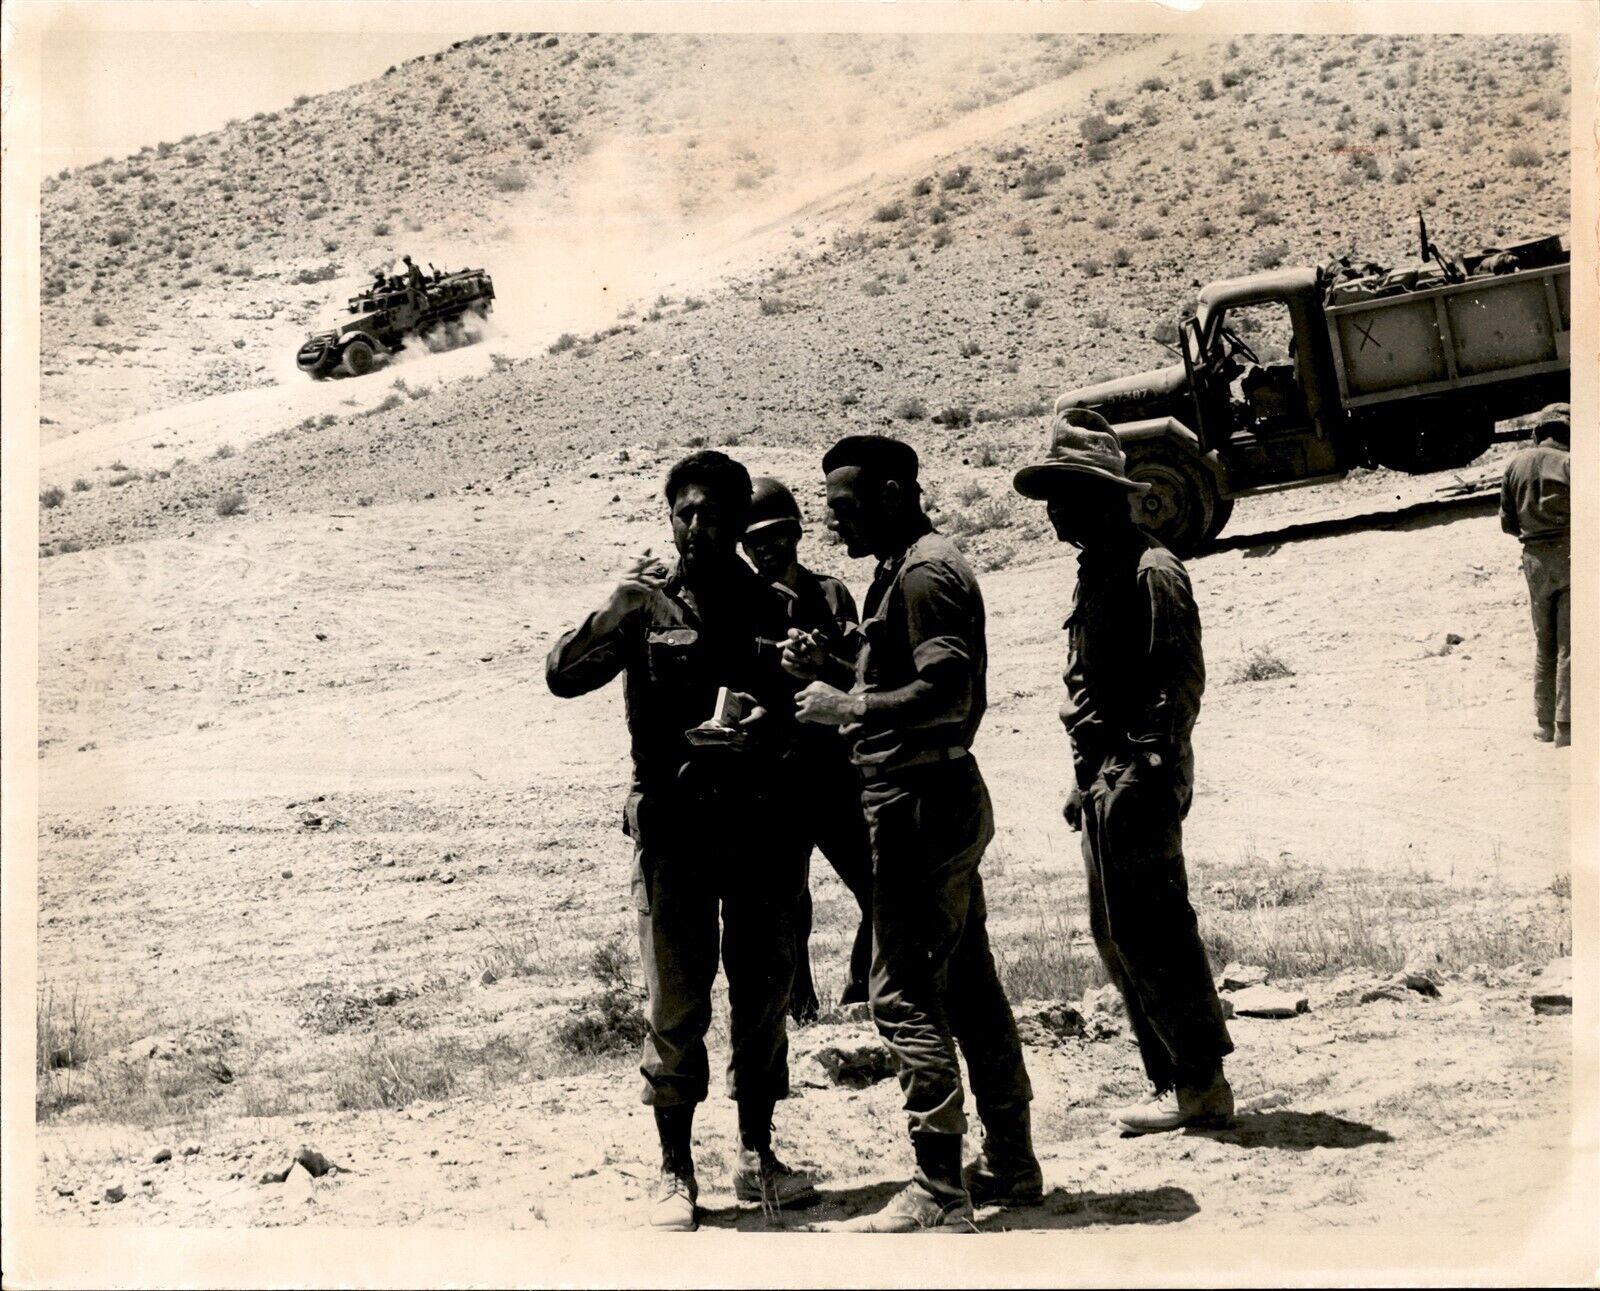 LG996 1967 Orig Roger Sheridan Photo WAR IN THE MIDDLE EAST SOLDIERS SMOKE BREAK